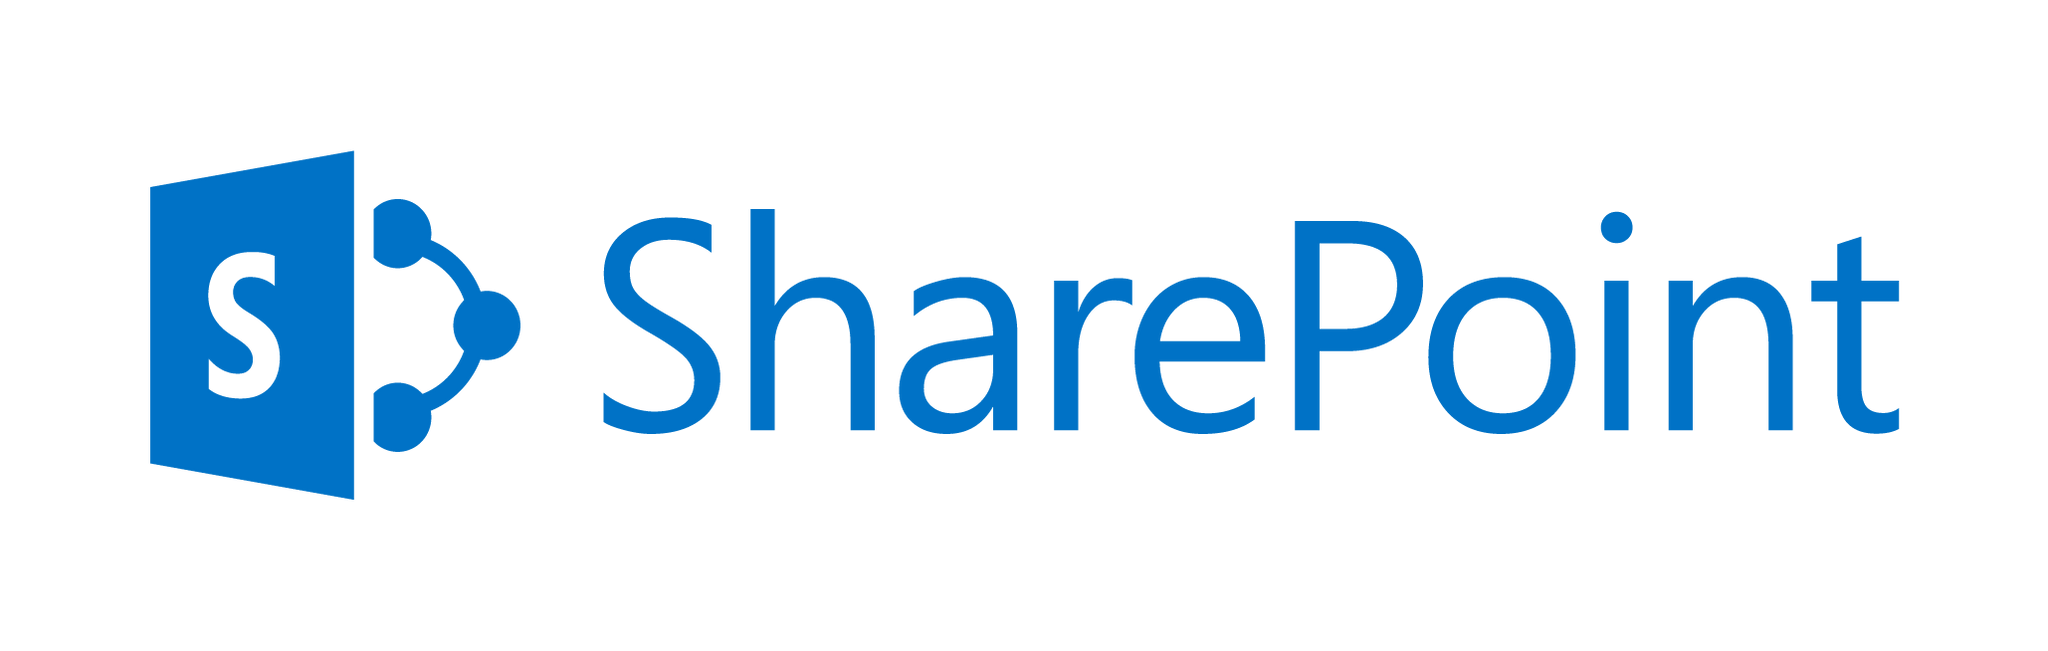 Microsoft Sharepoint не работает?